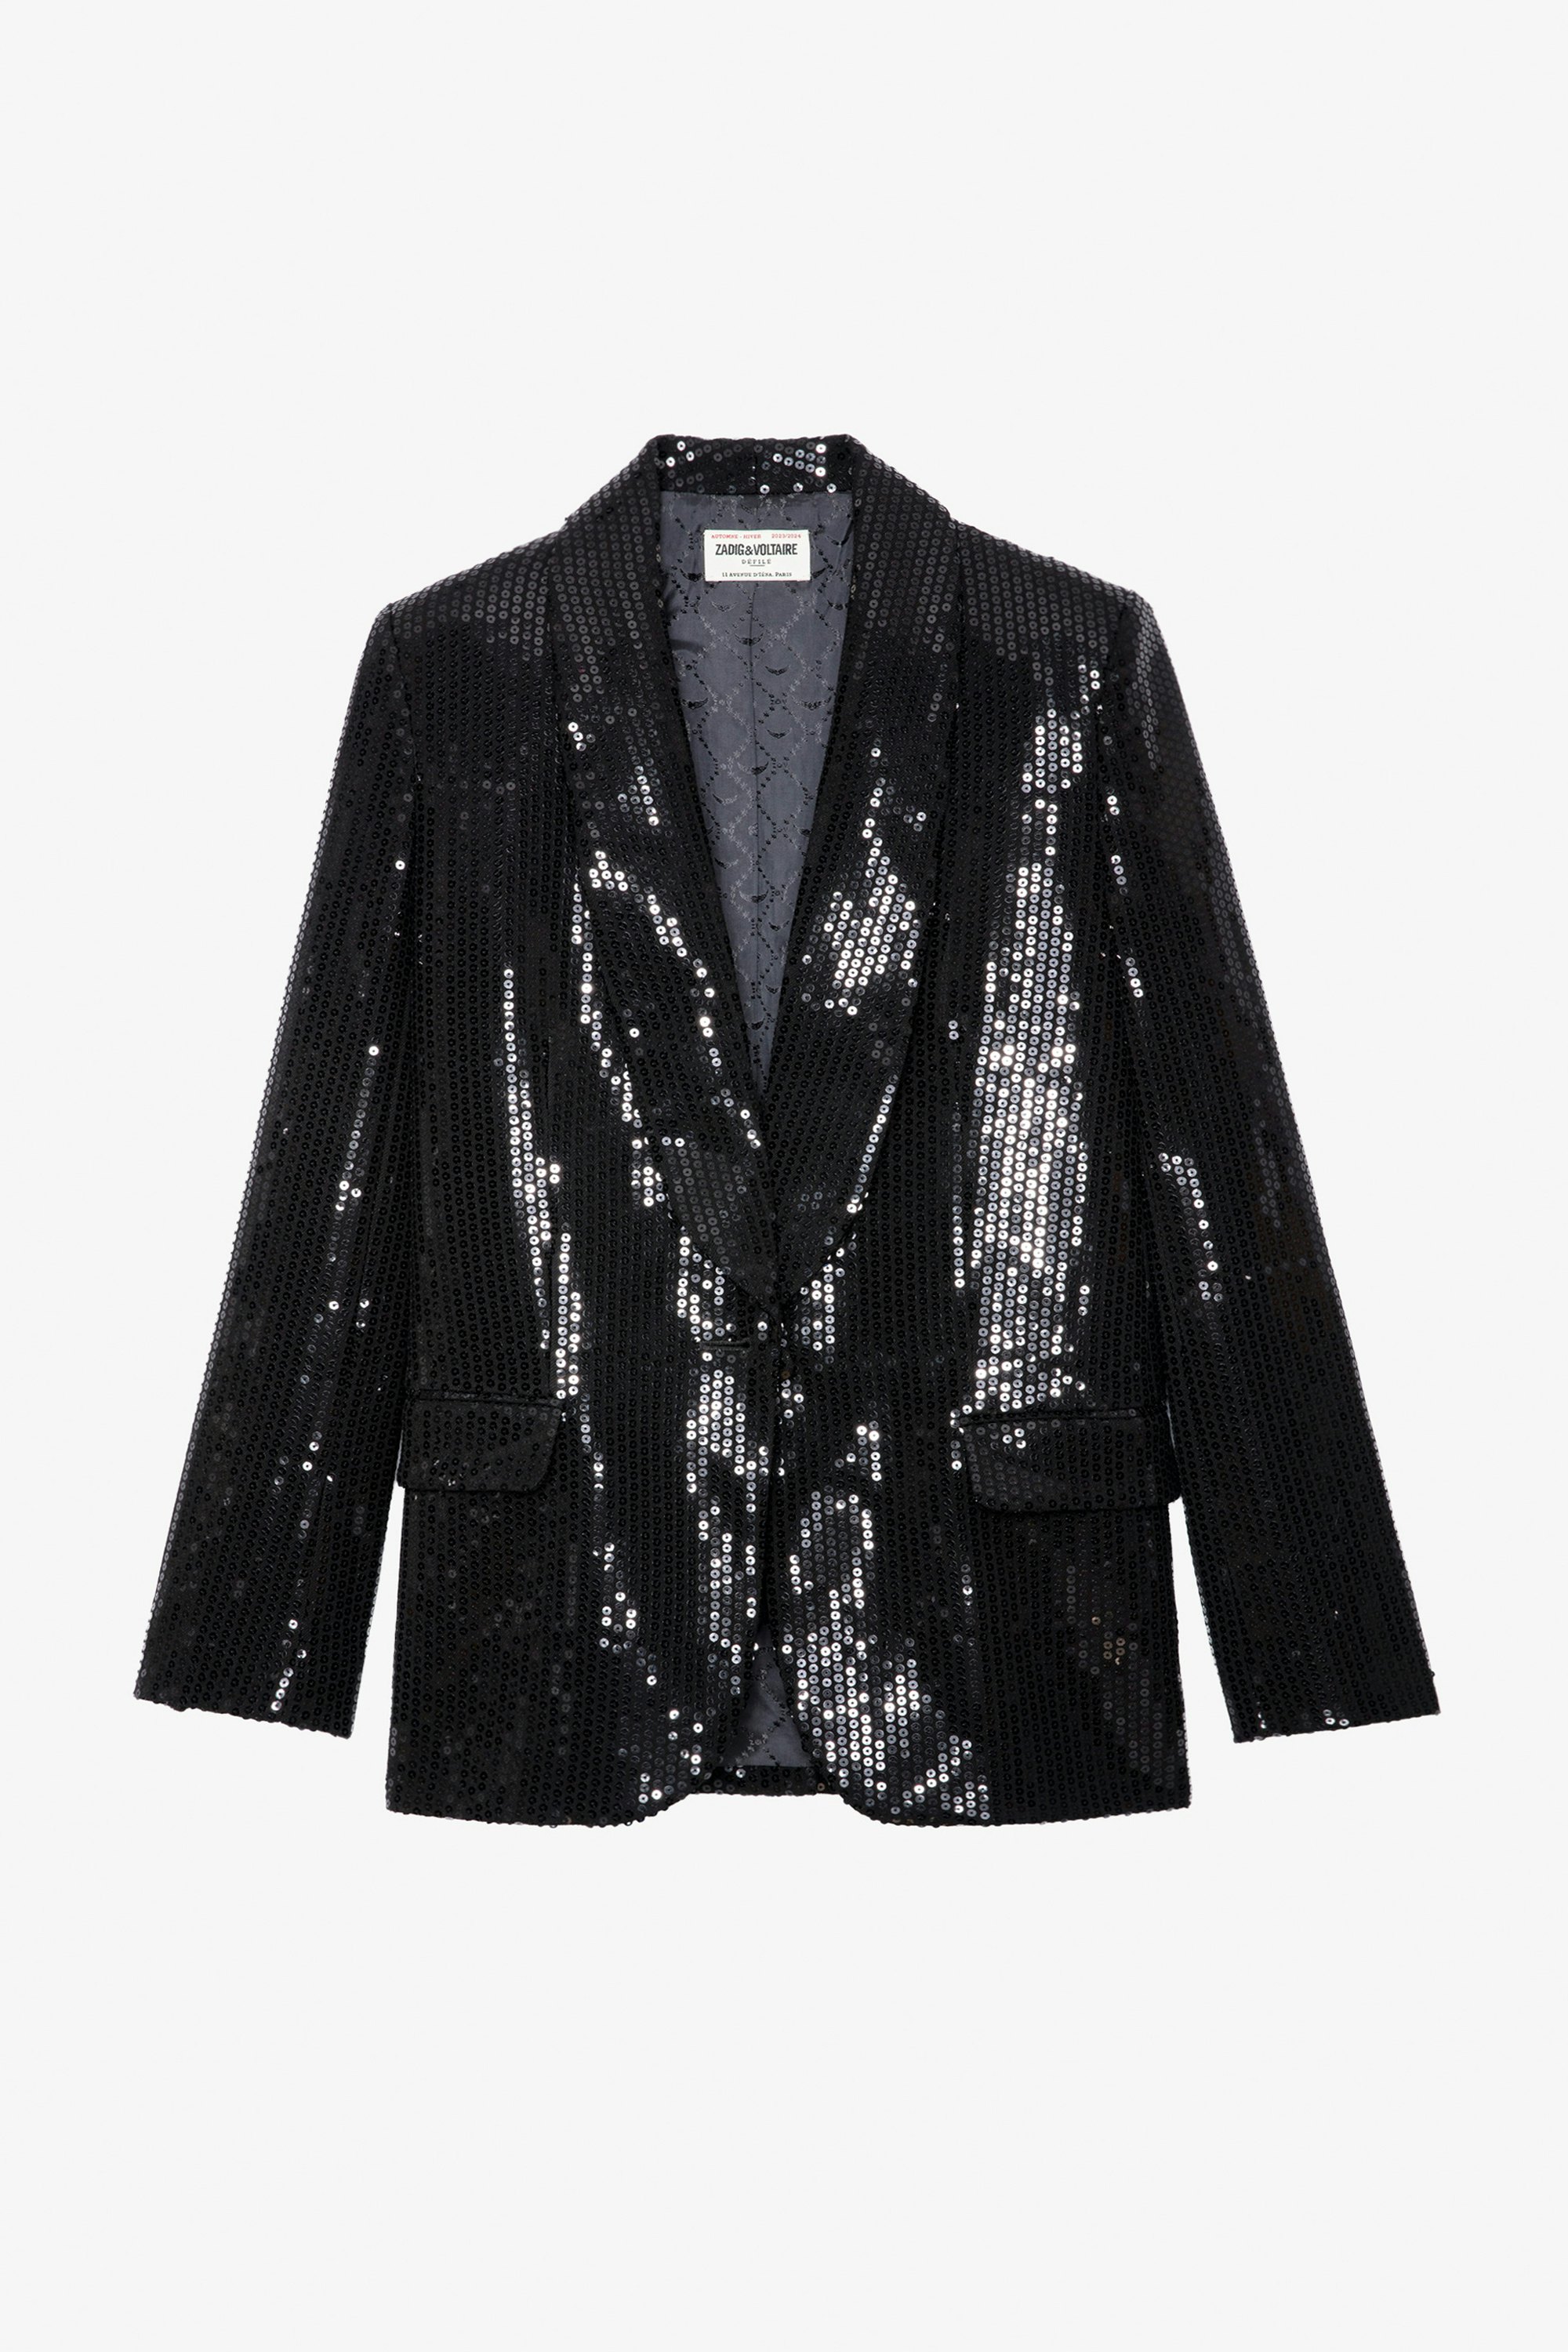 Vive Sequin Blazer - Women’s black tailored blazer with sequins, button fastening and pockets.